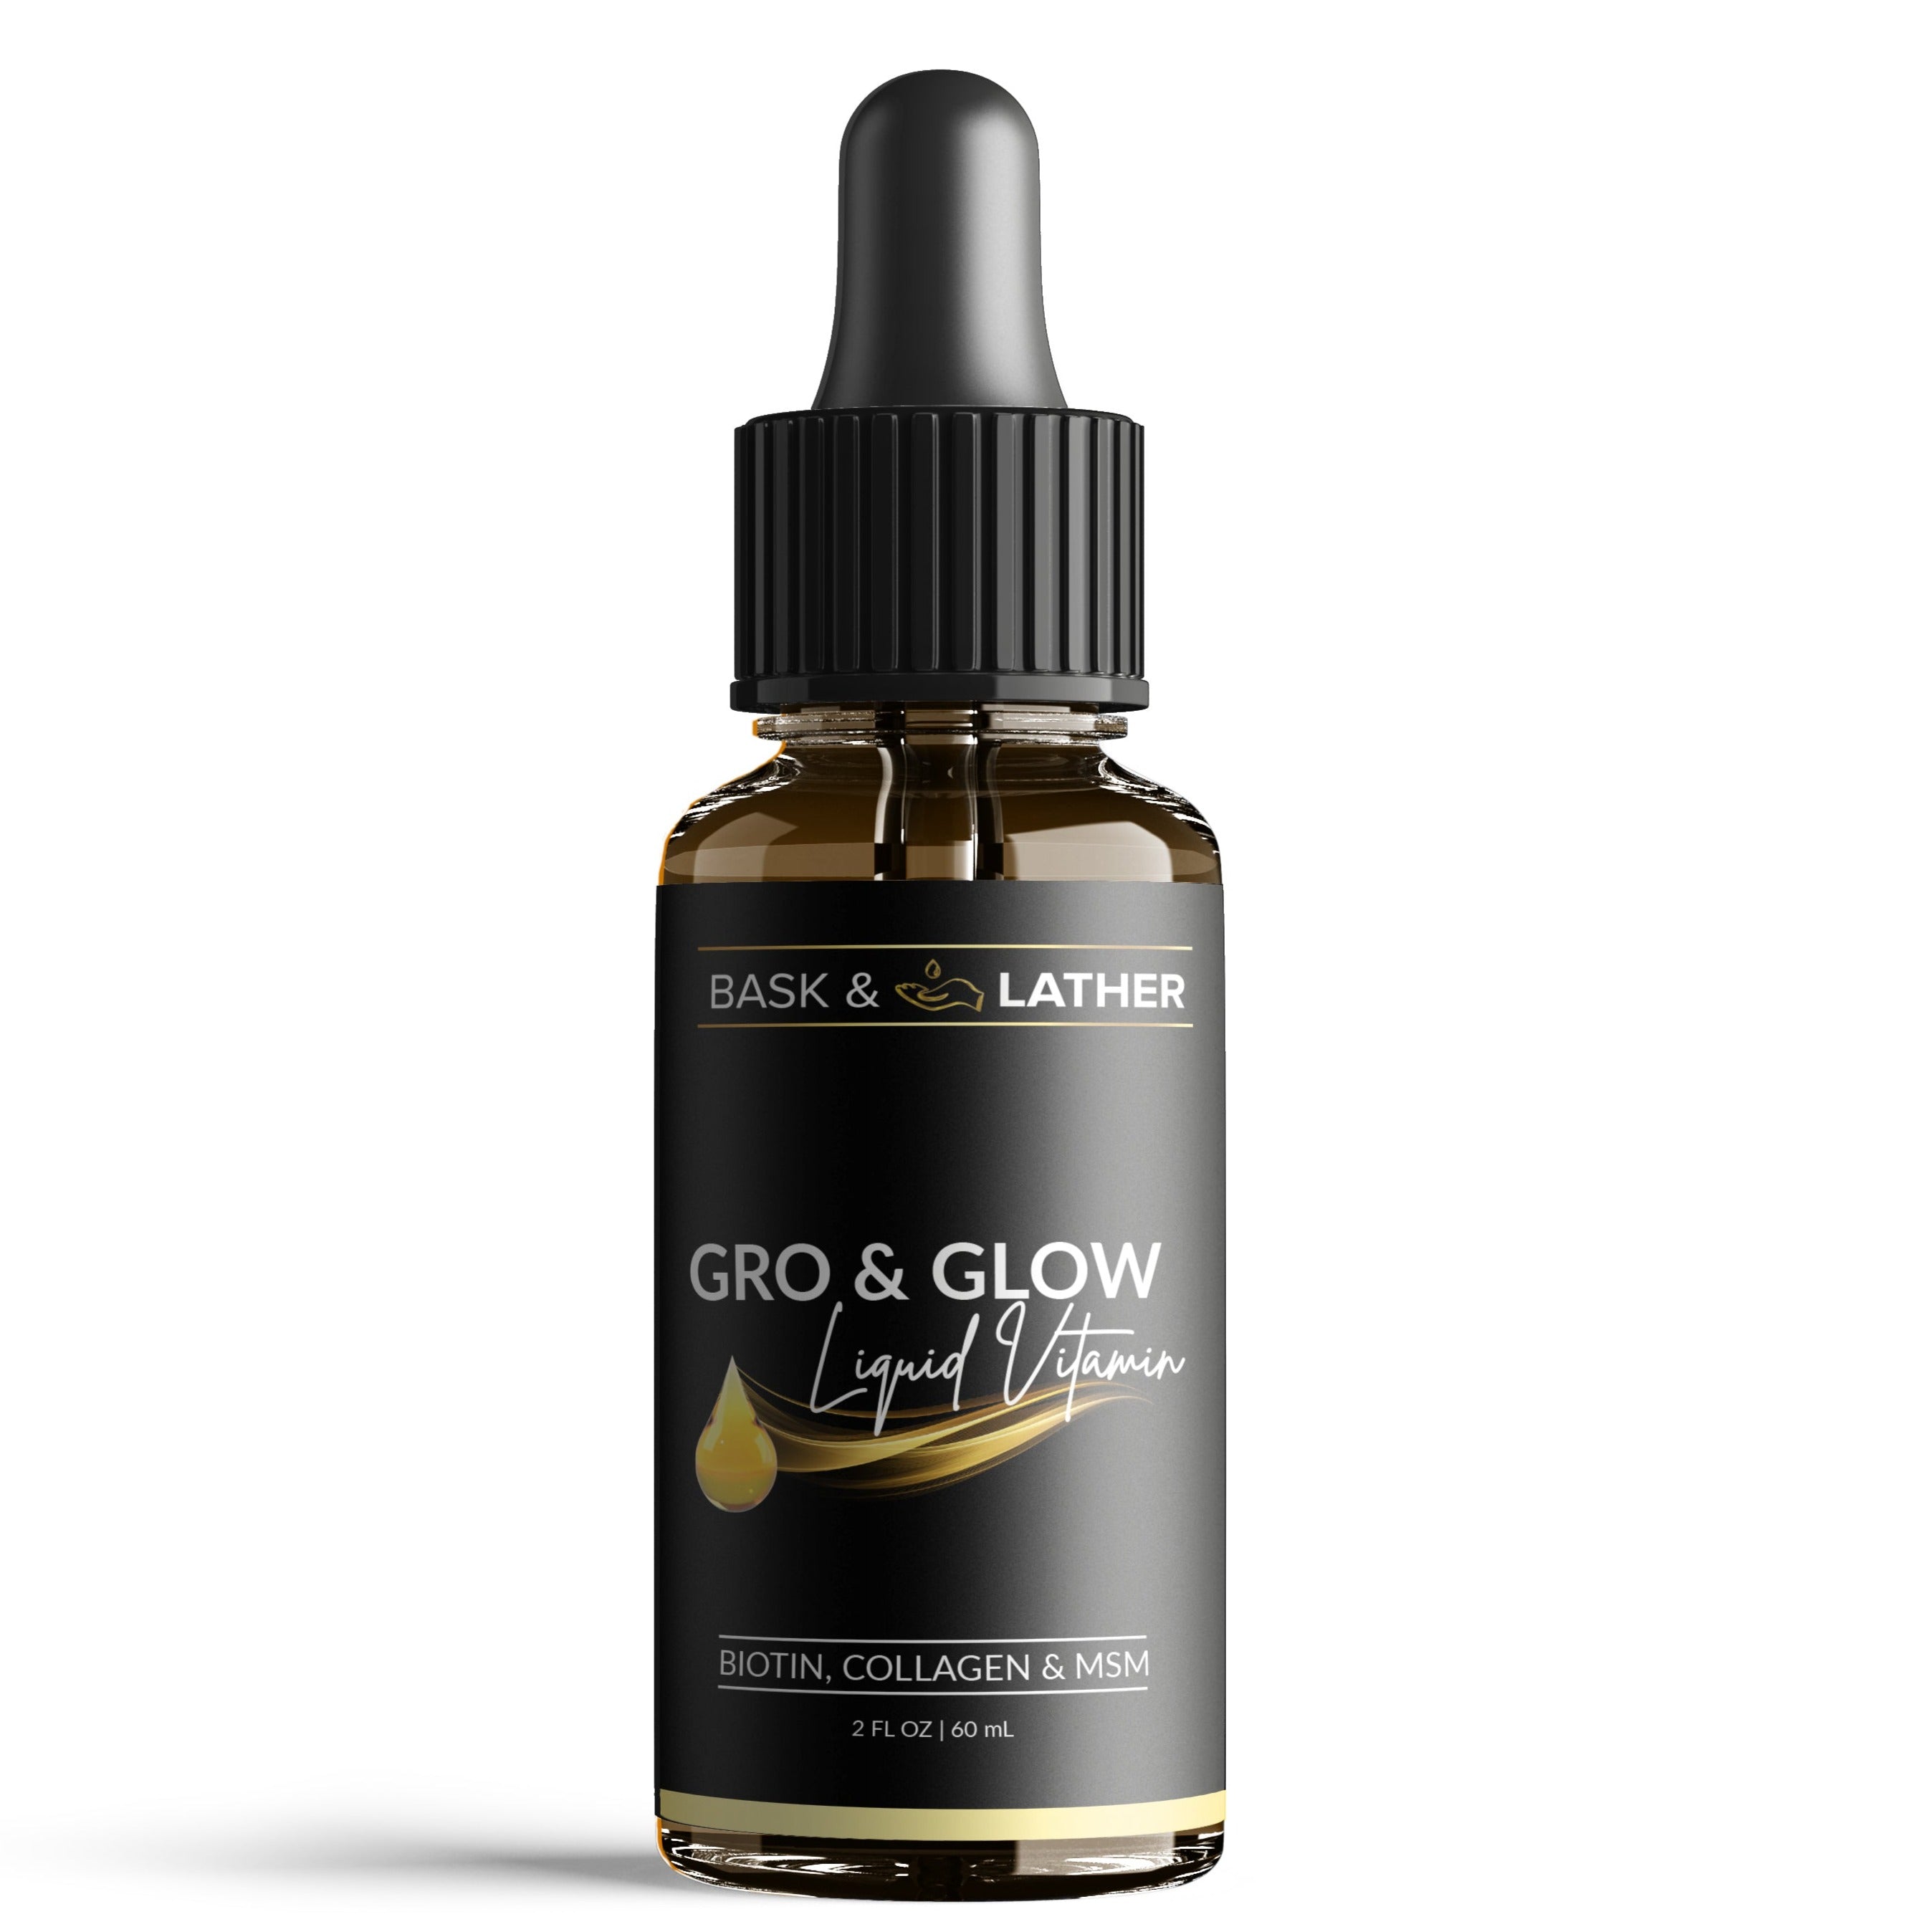 Gro & Glow Liquid Vitamins